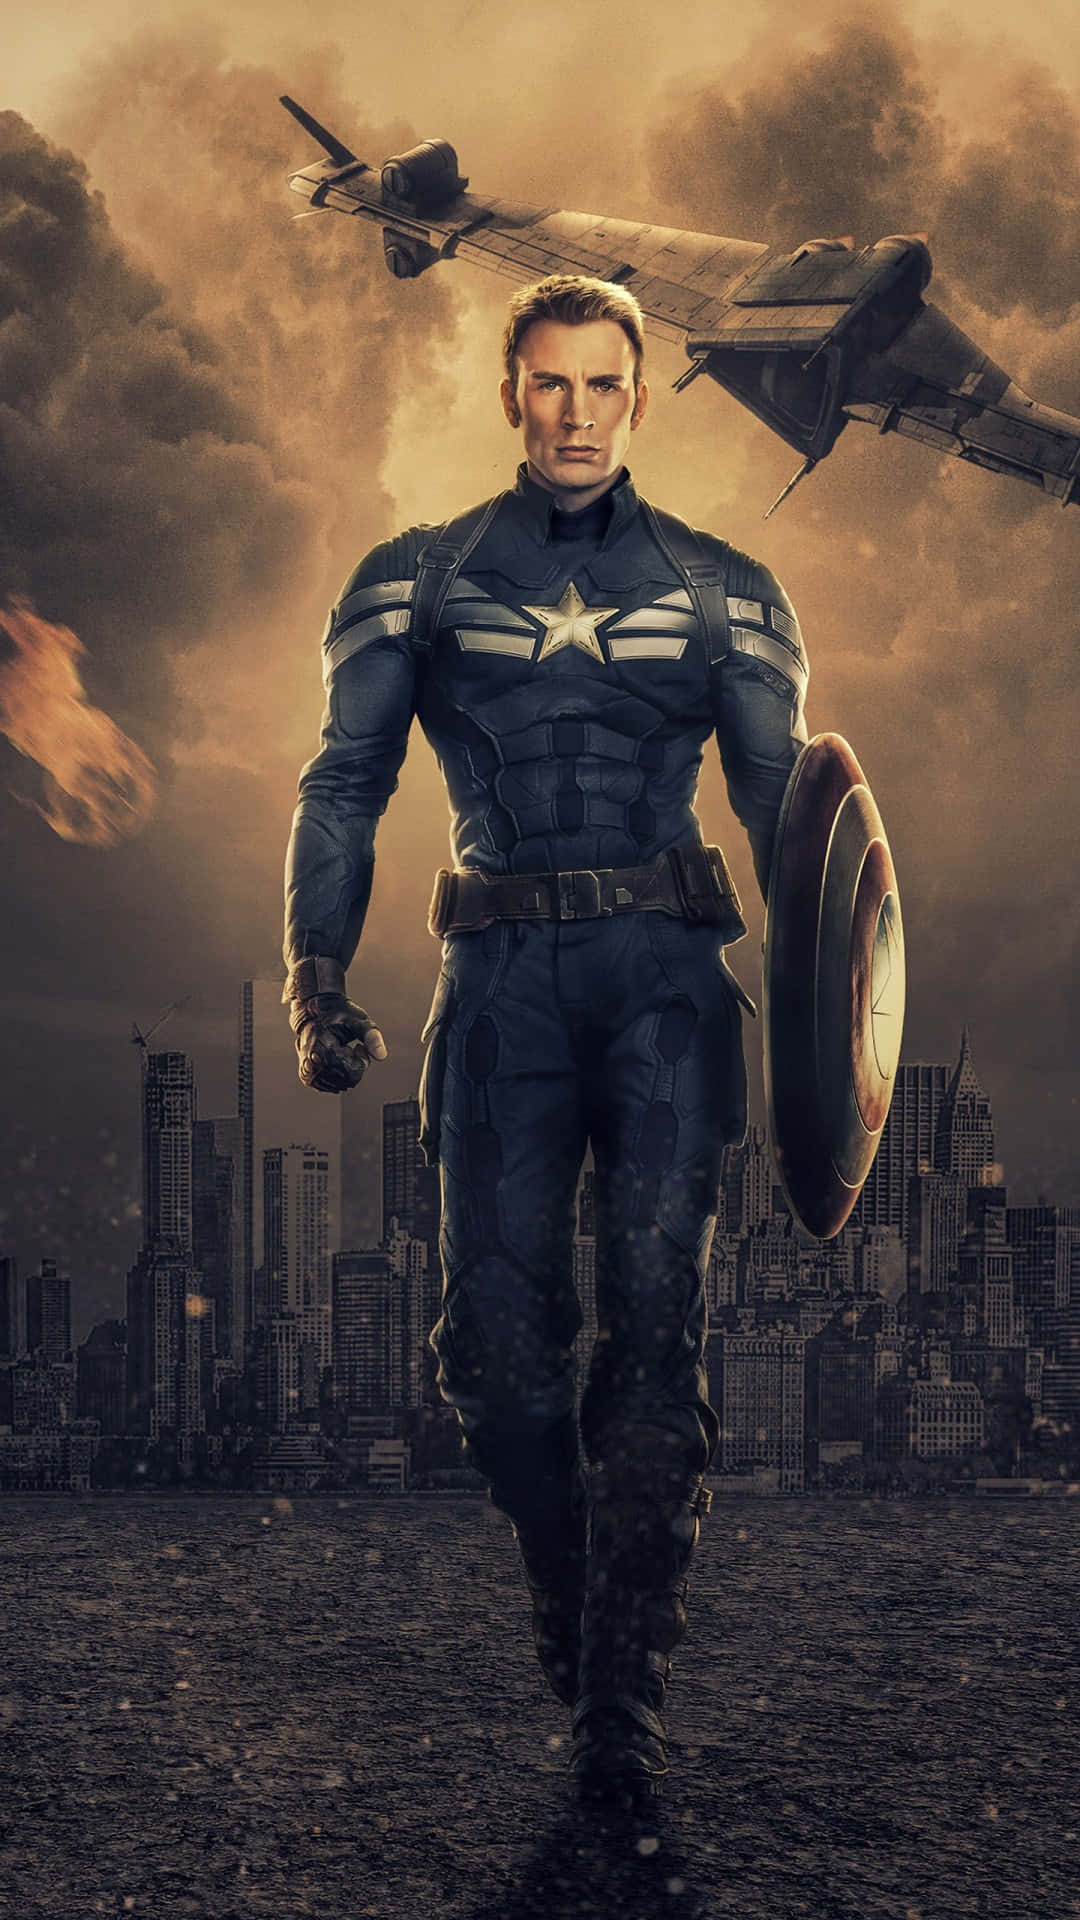 Free 4k Captain America Wallpaper Downloads, [100+] 4k Captain America  Wallpapers for FREE 